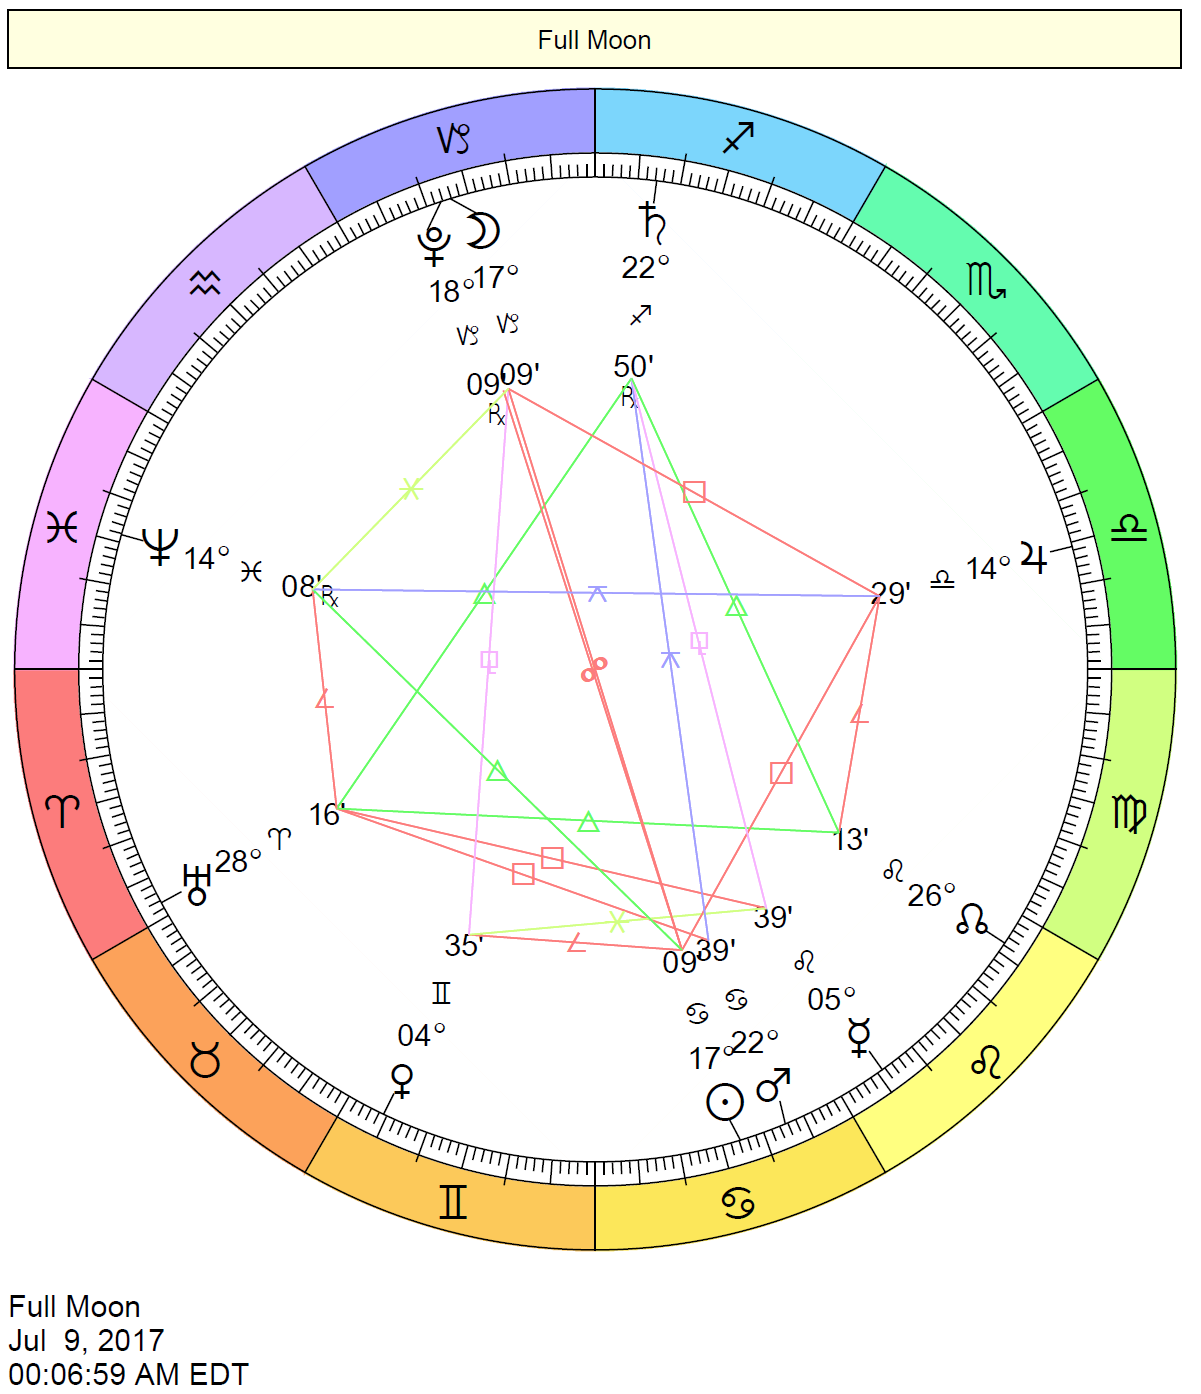 Full Moon in Capricorn Chart - July 9, 2017